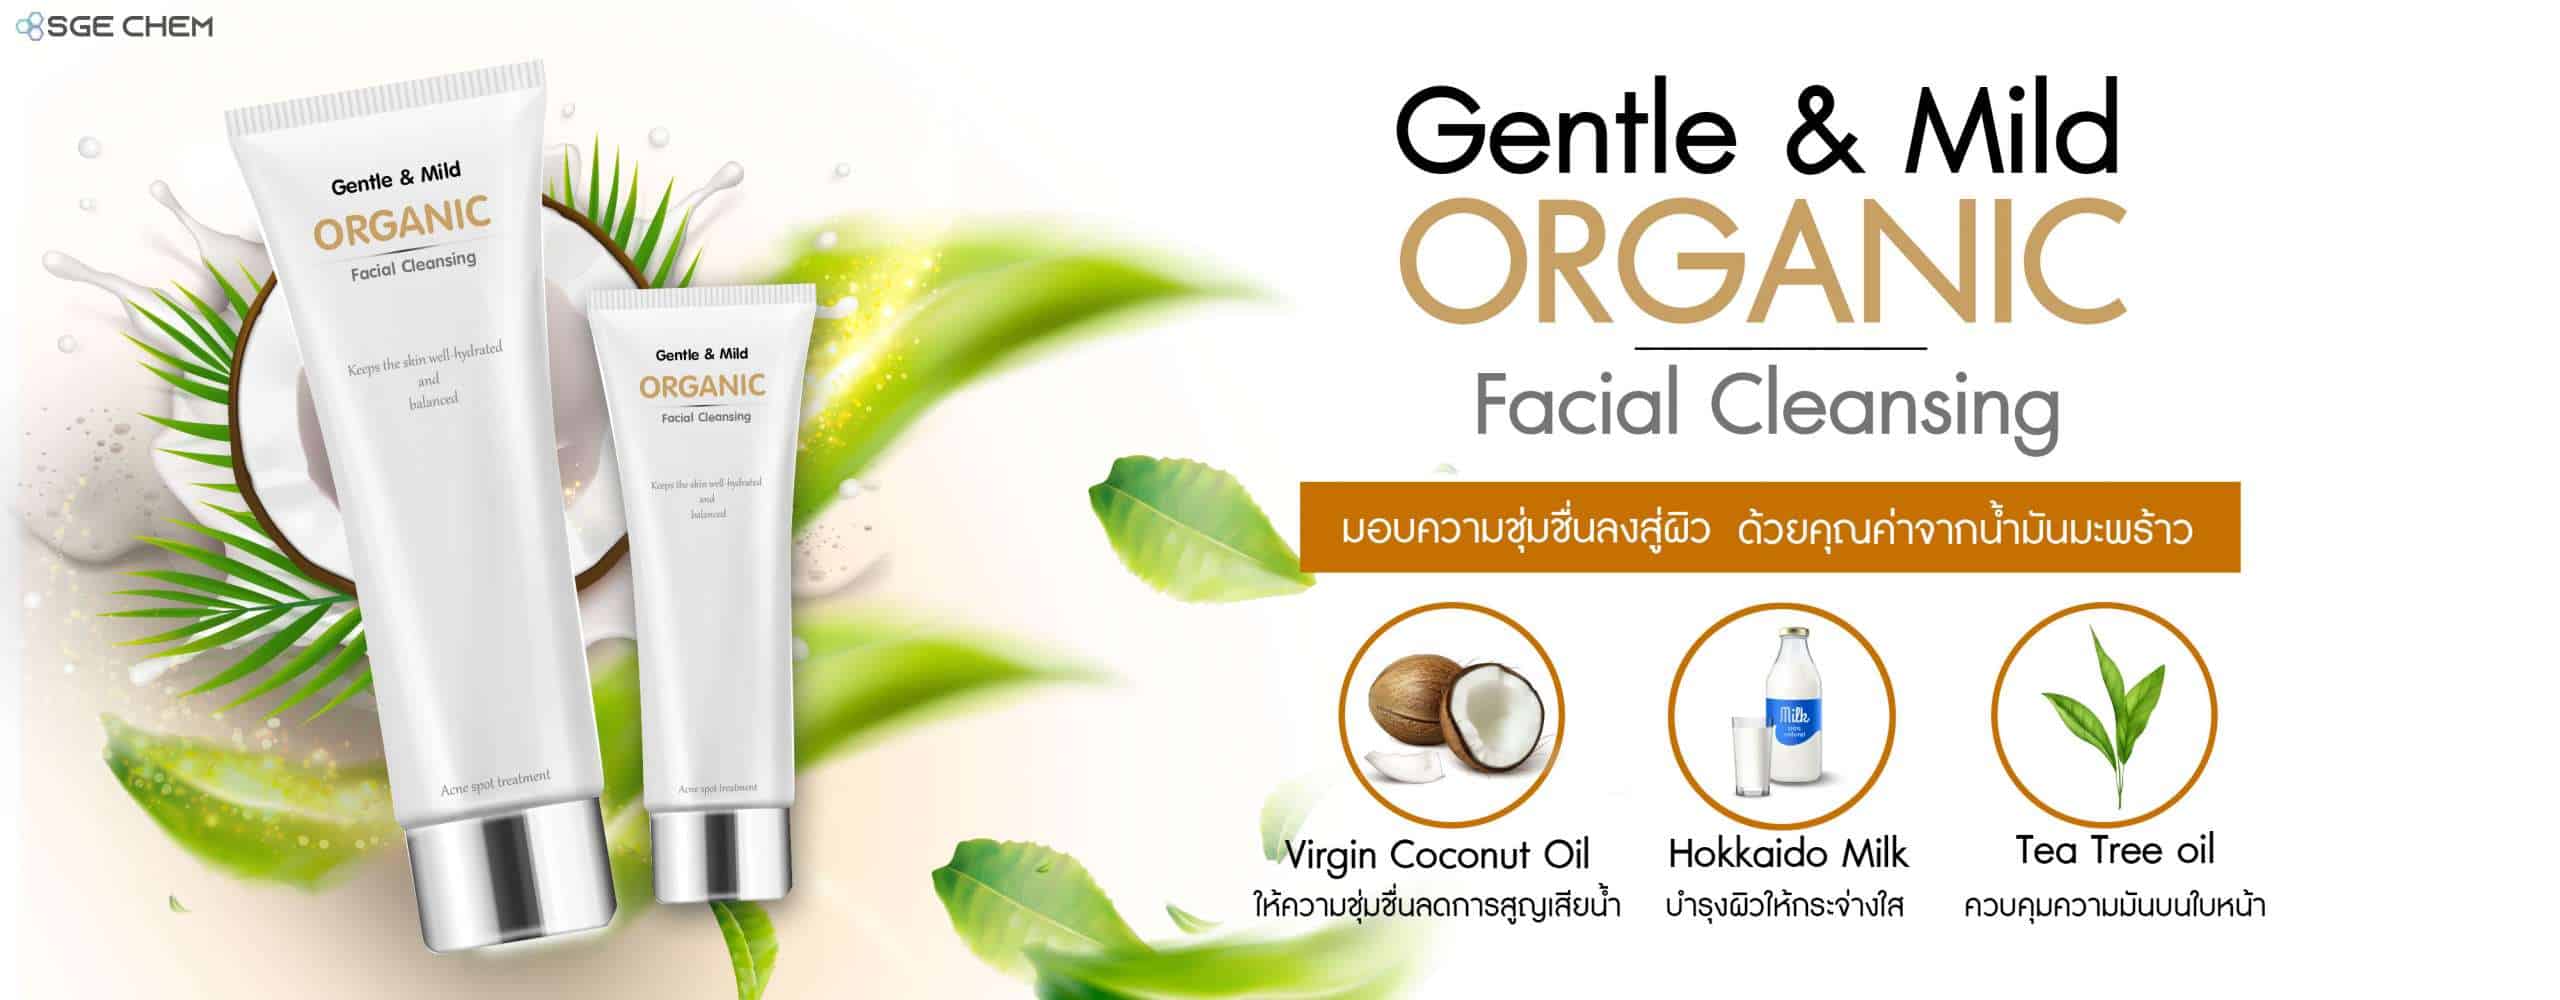 Gentle & Mild Organic Facial Cleansing